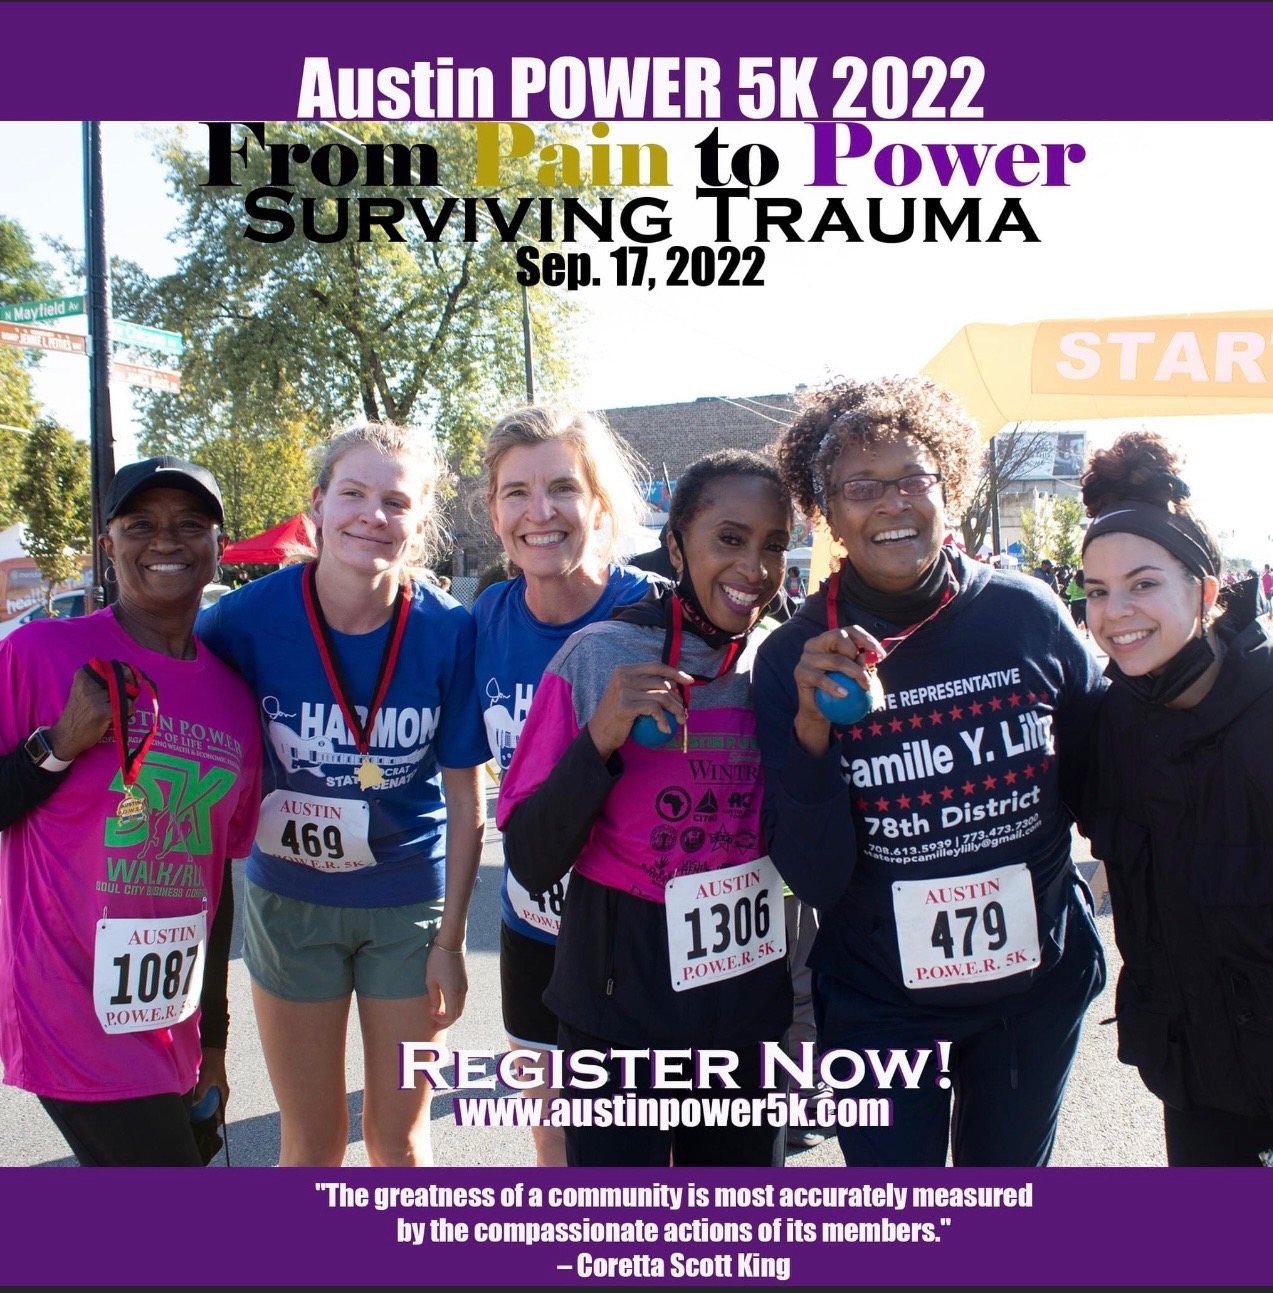 Austin POWER 5k Walk/Run this Saturday, 9/17